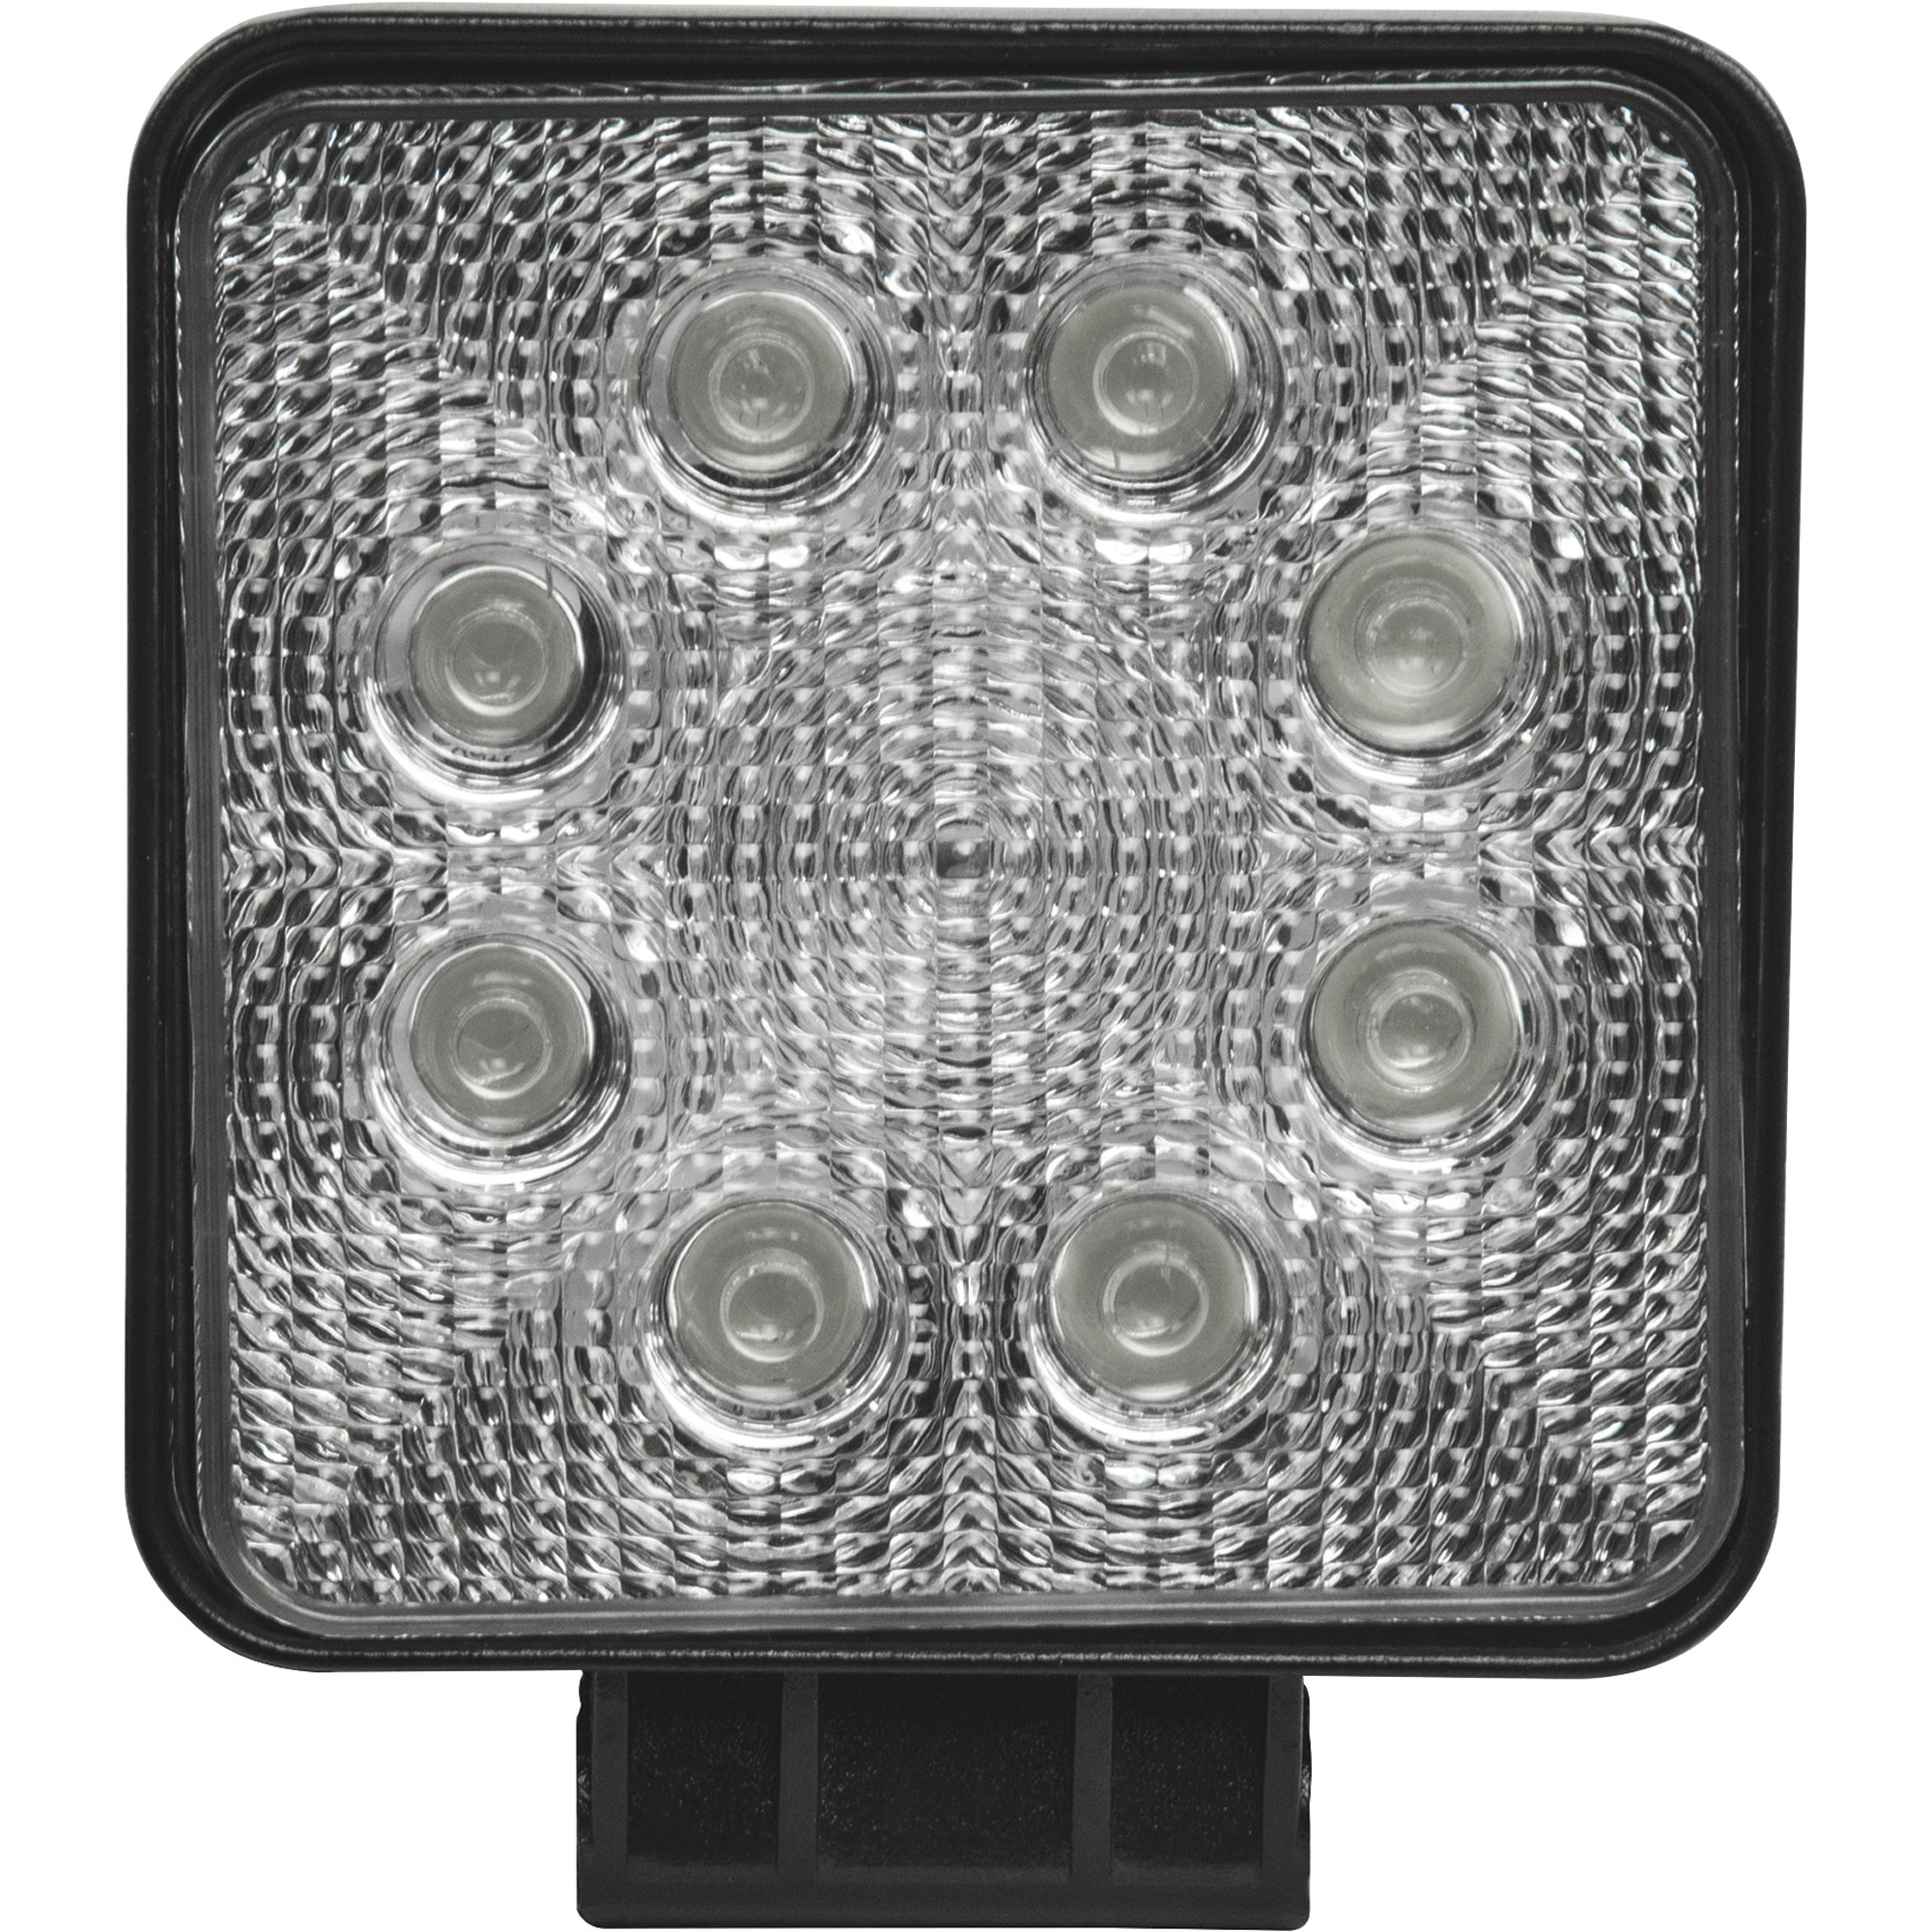 Blazer 12 Volt LED Work Light with Flood Beam â 4.25Inch, Square, 1560 Lumens, Model CWL506